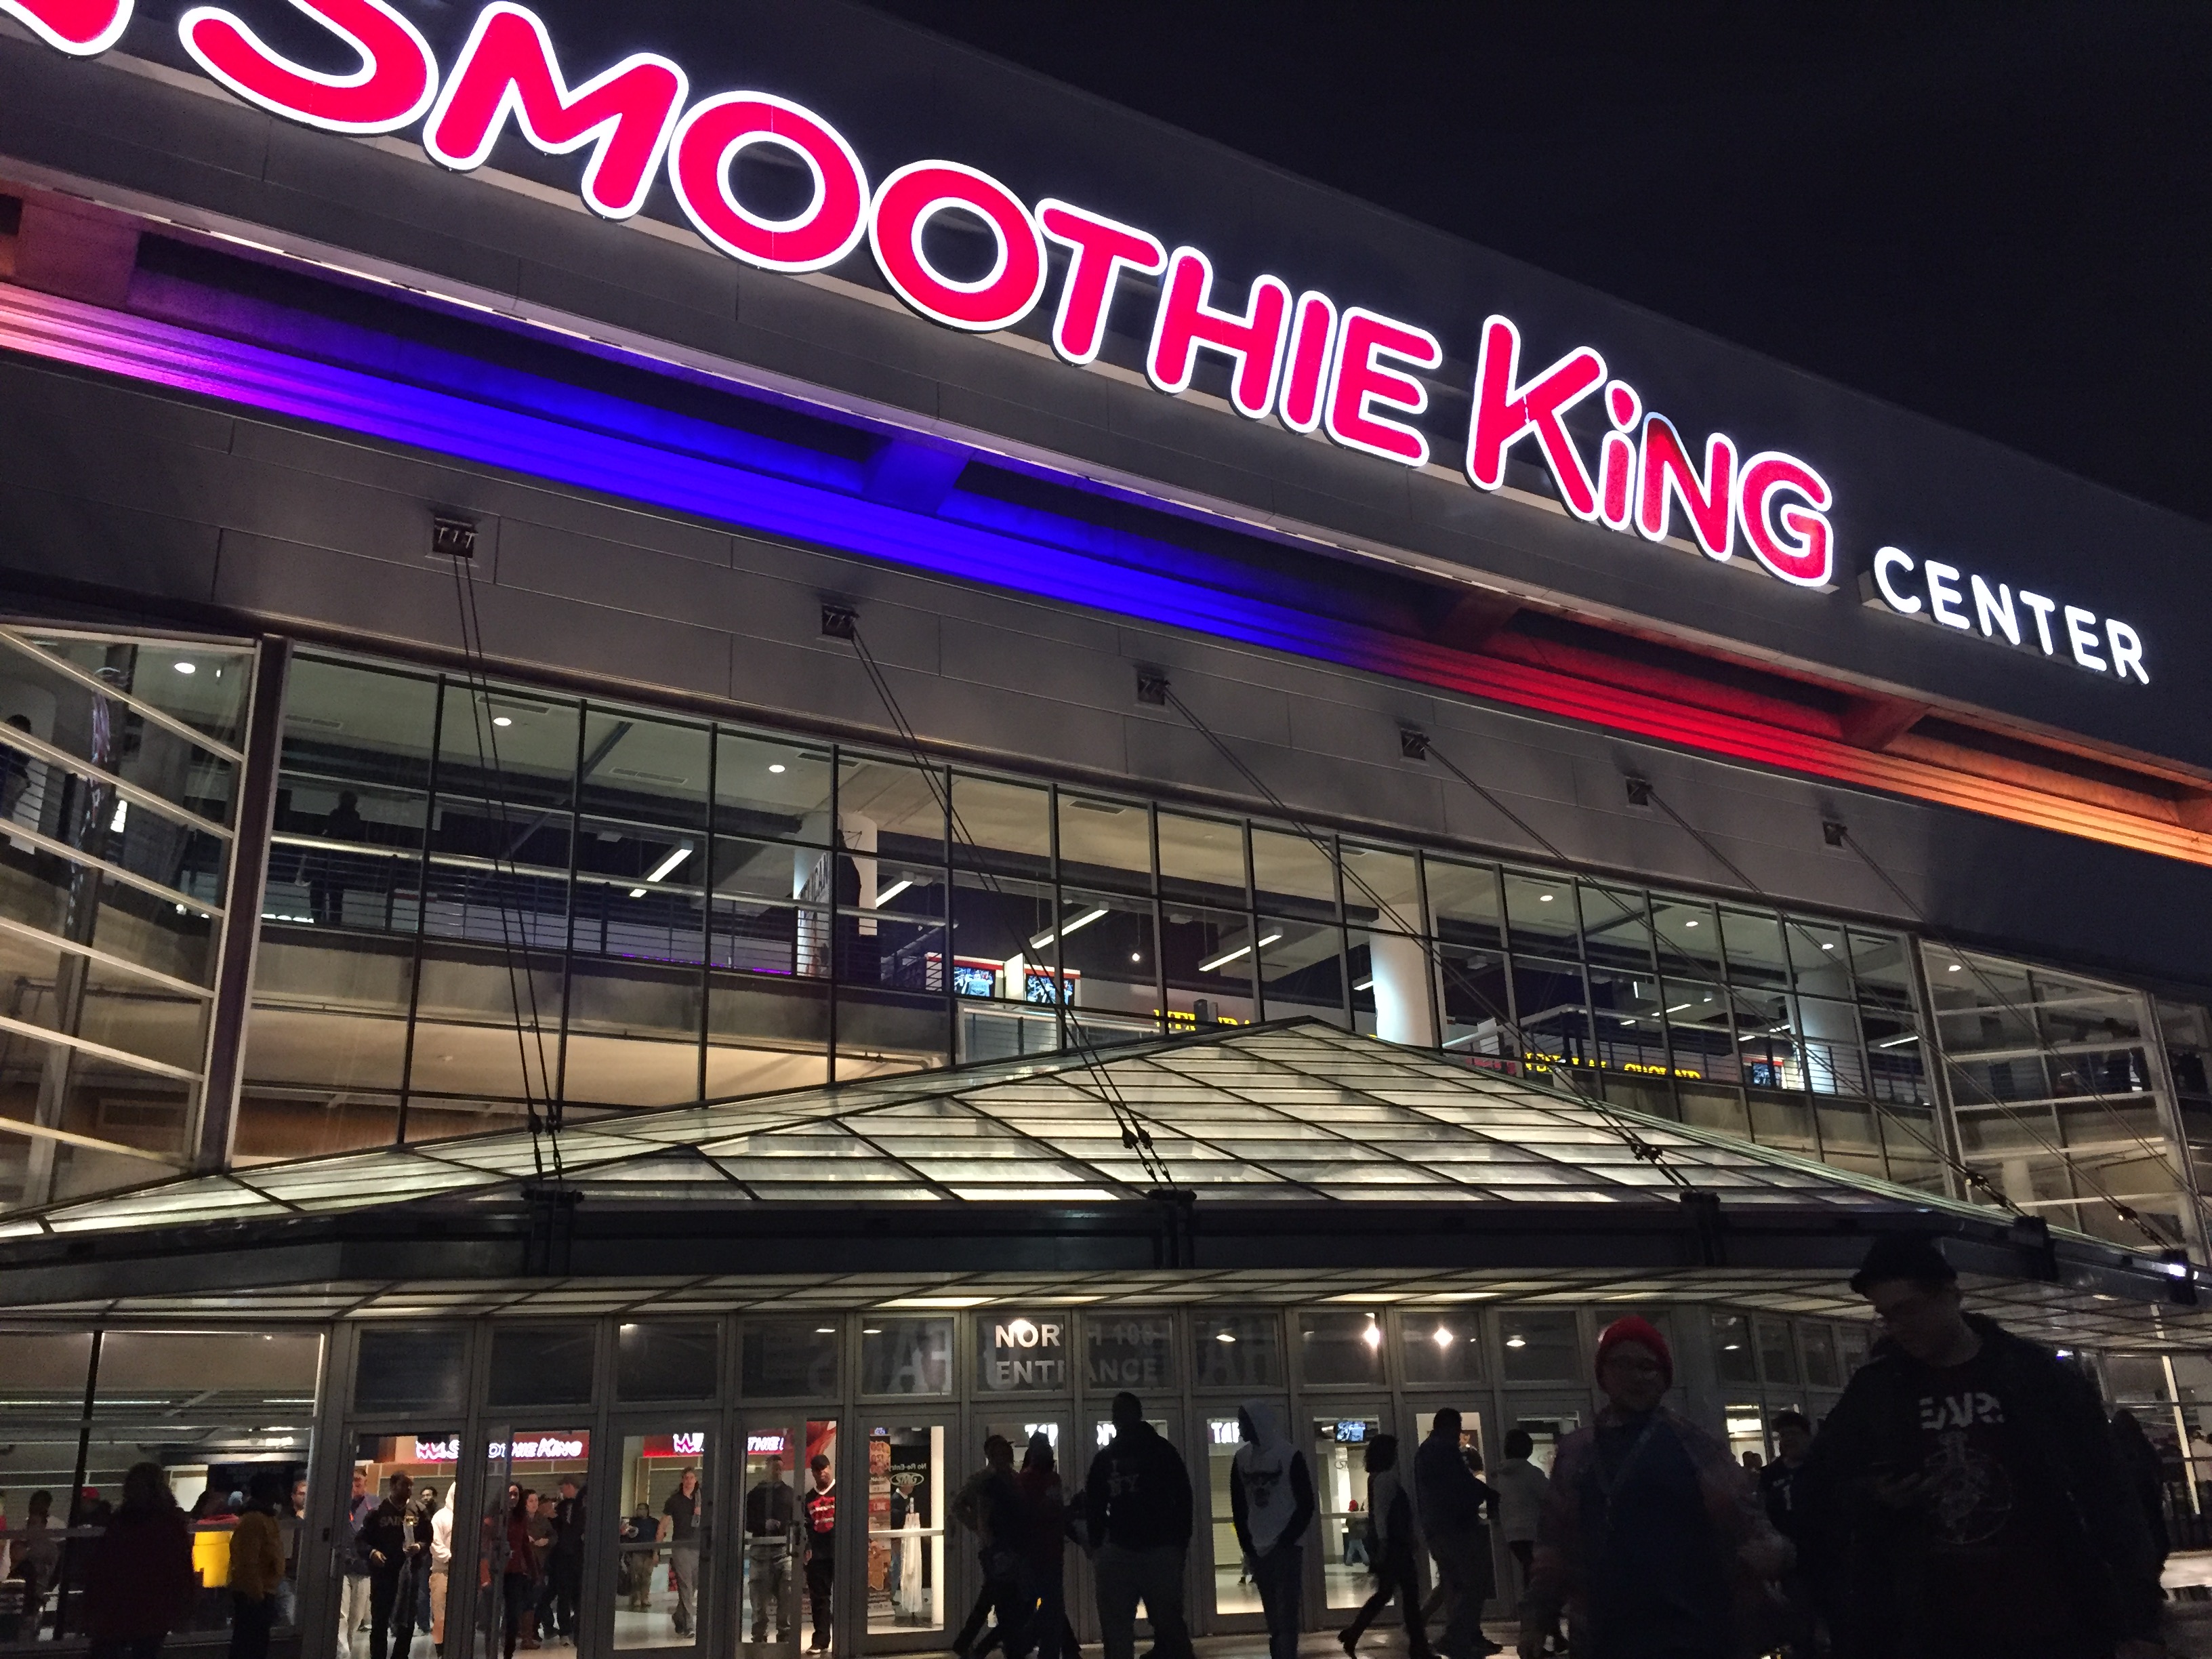 smoothie king center concourse